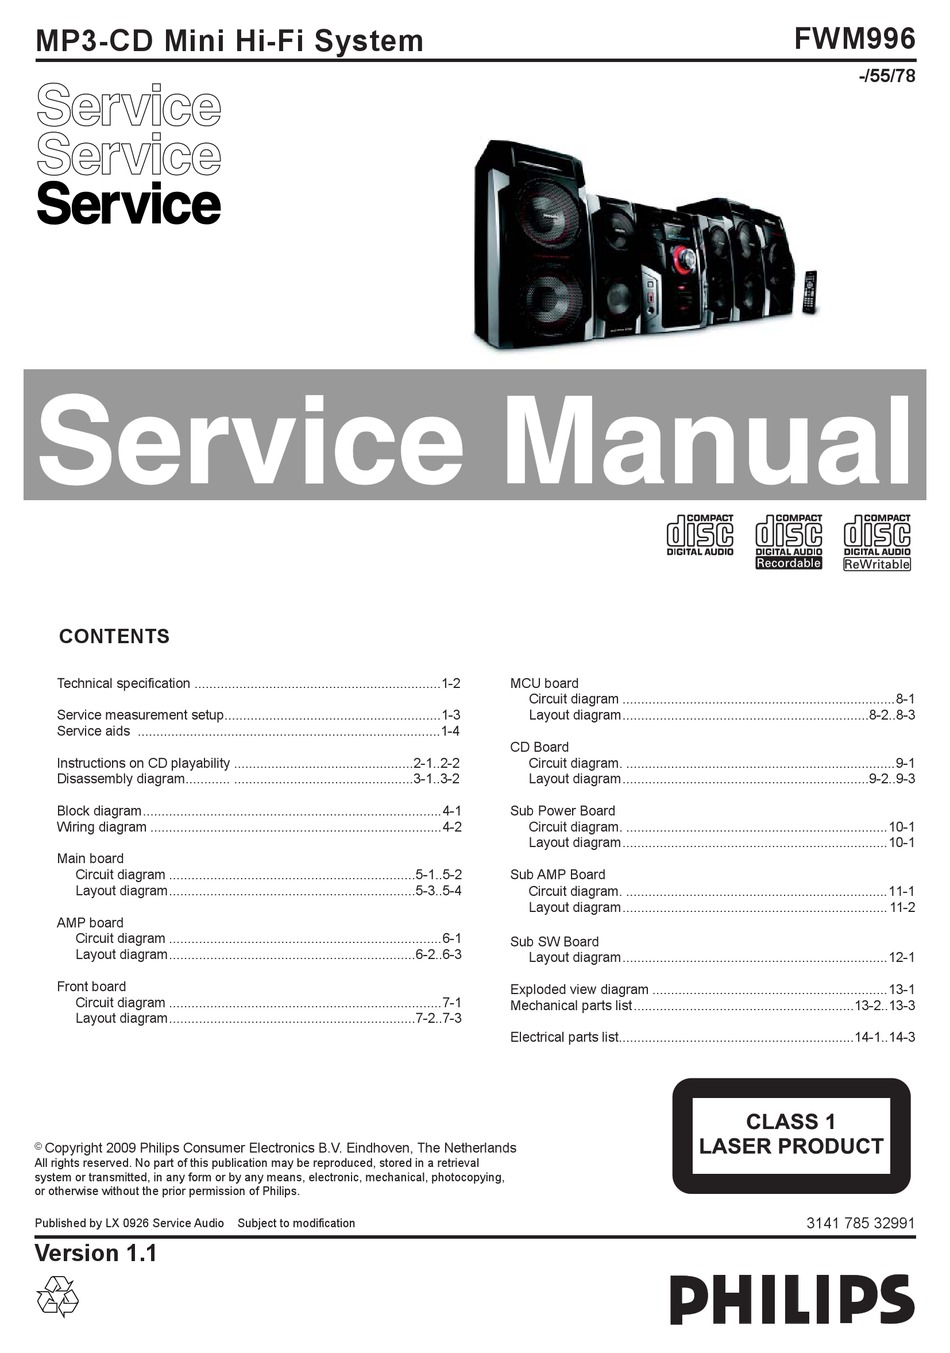 Philips Fwm996 Service Manual Pdf Download Manualslib